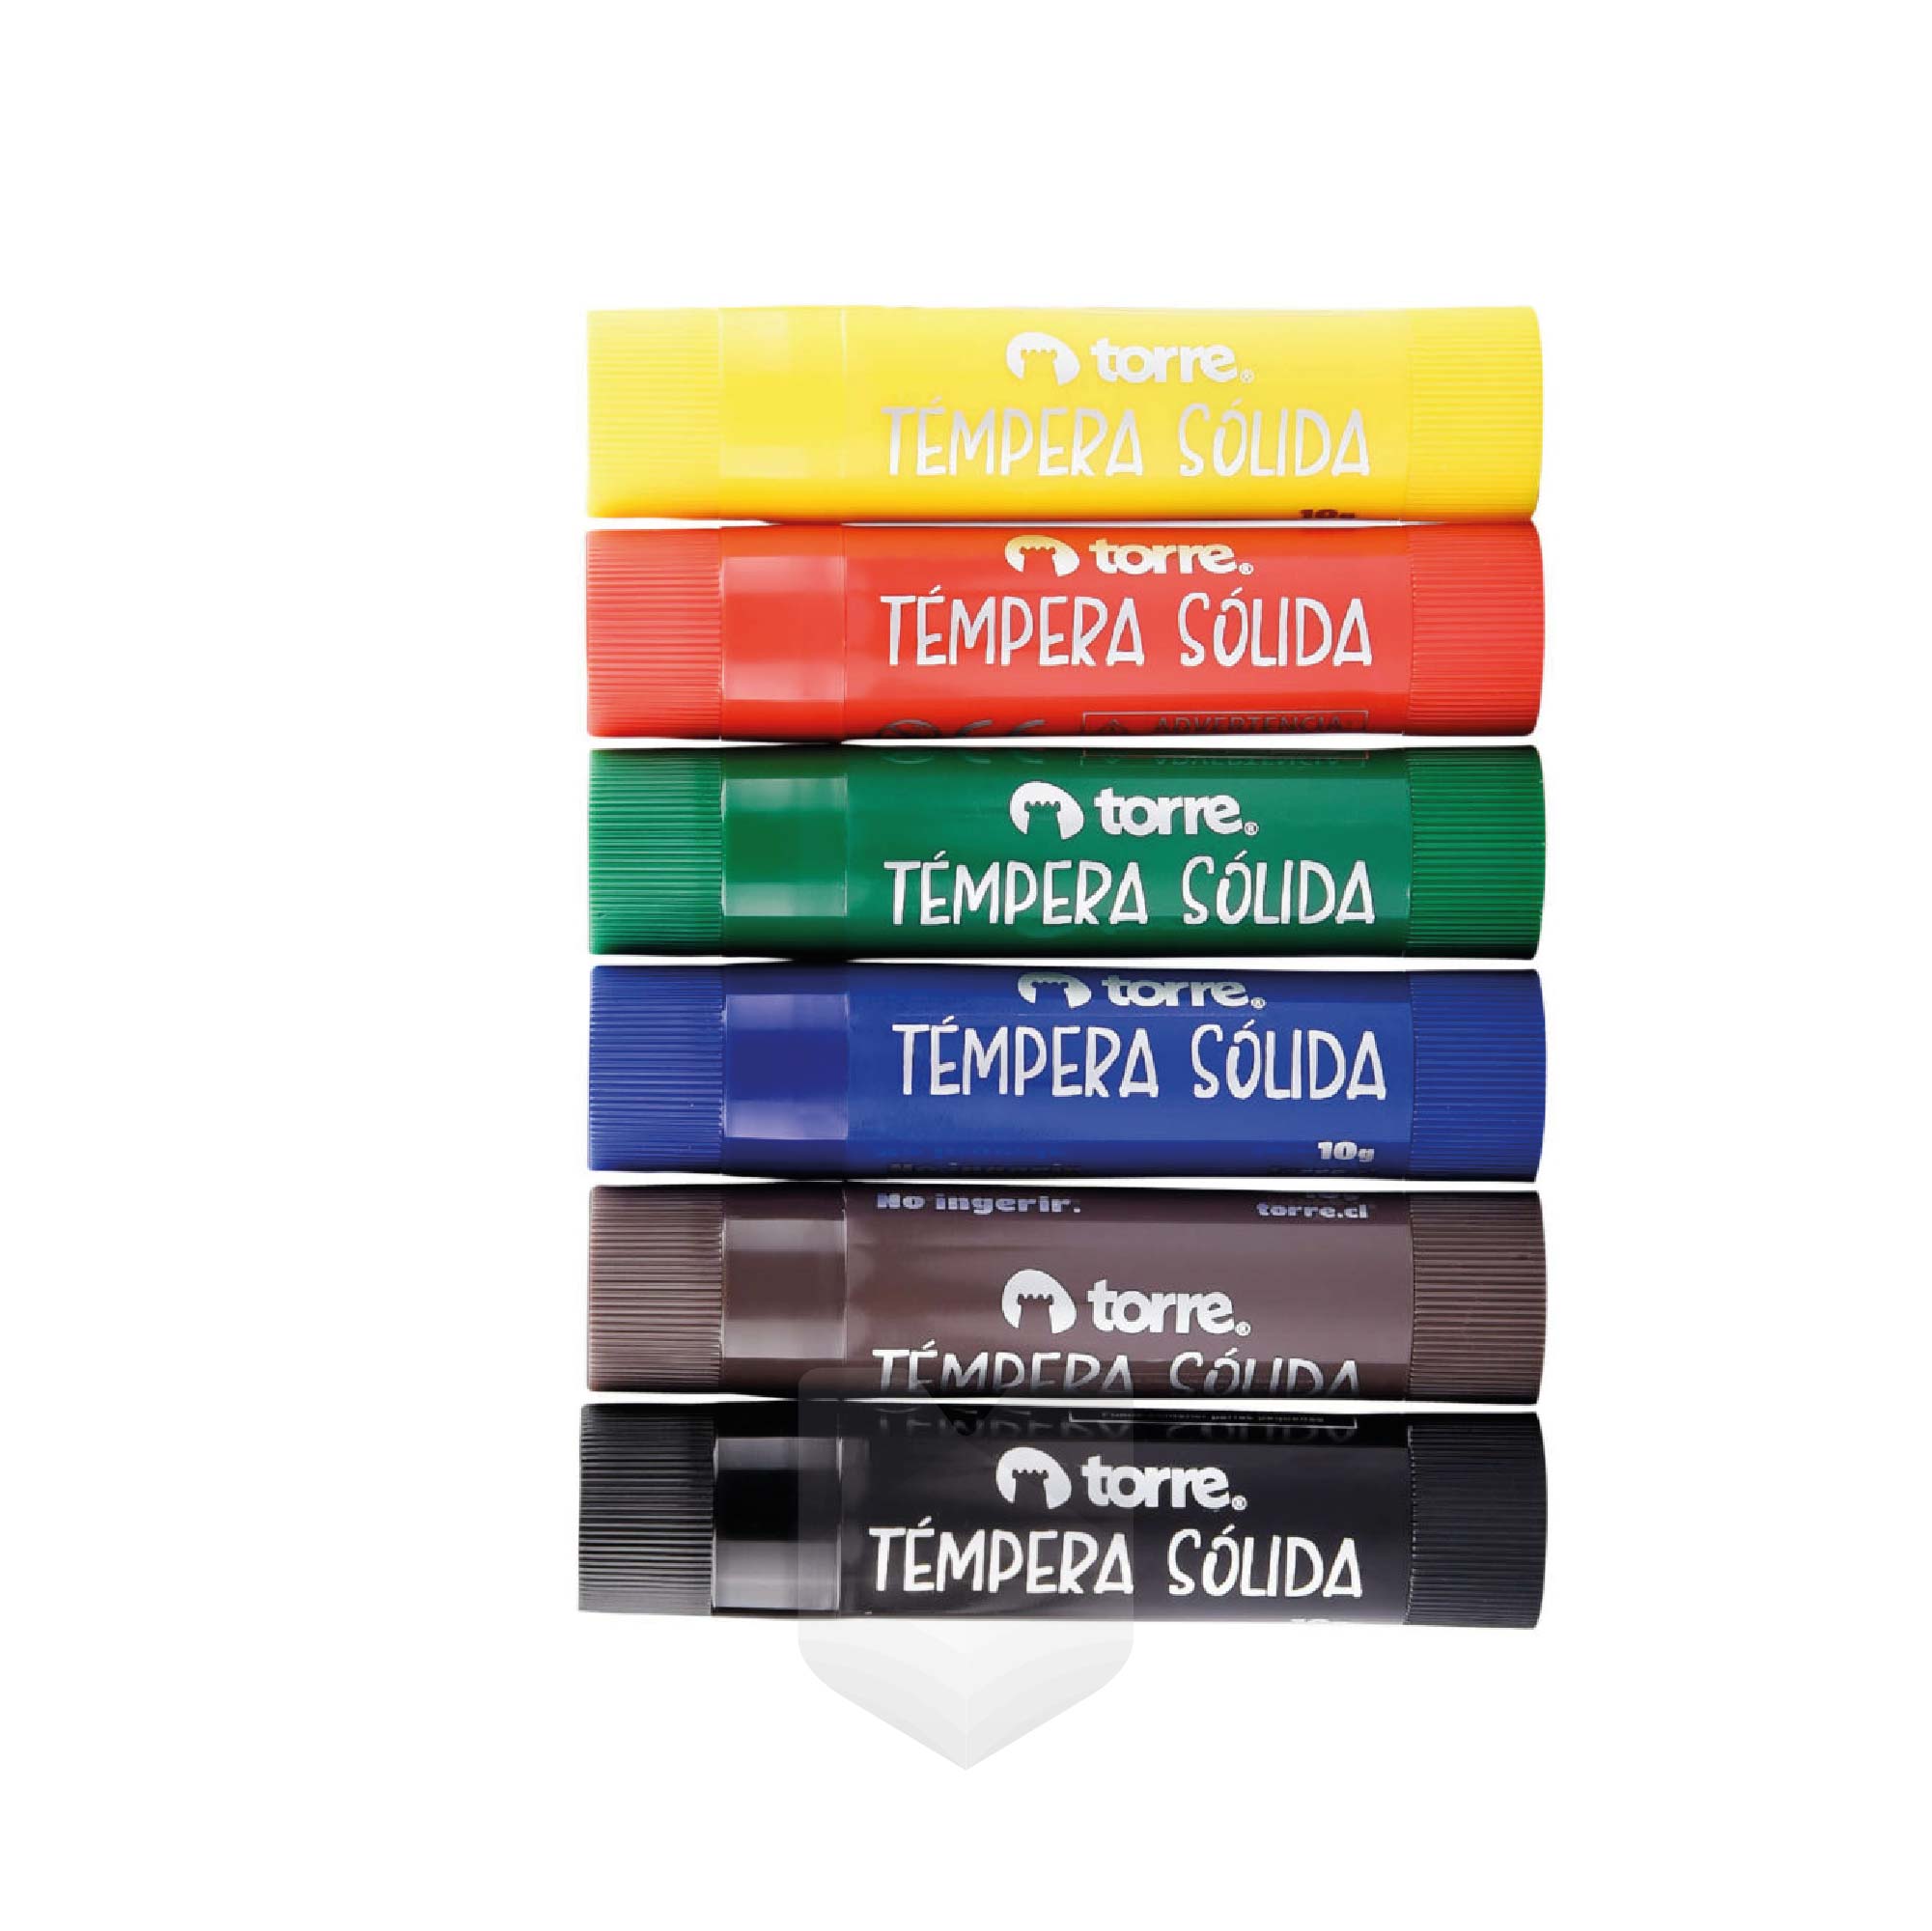 Tempera Solida 6 Colores - Torre